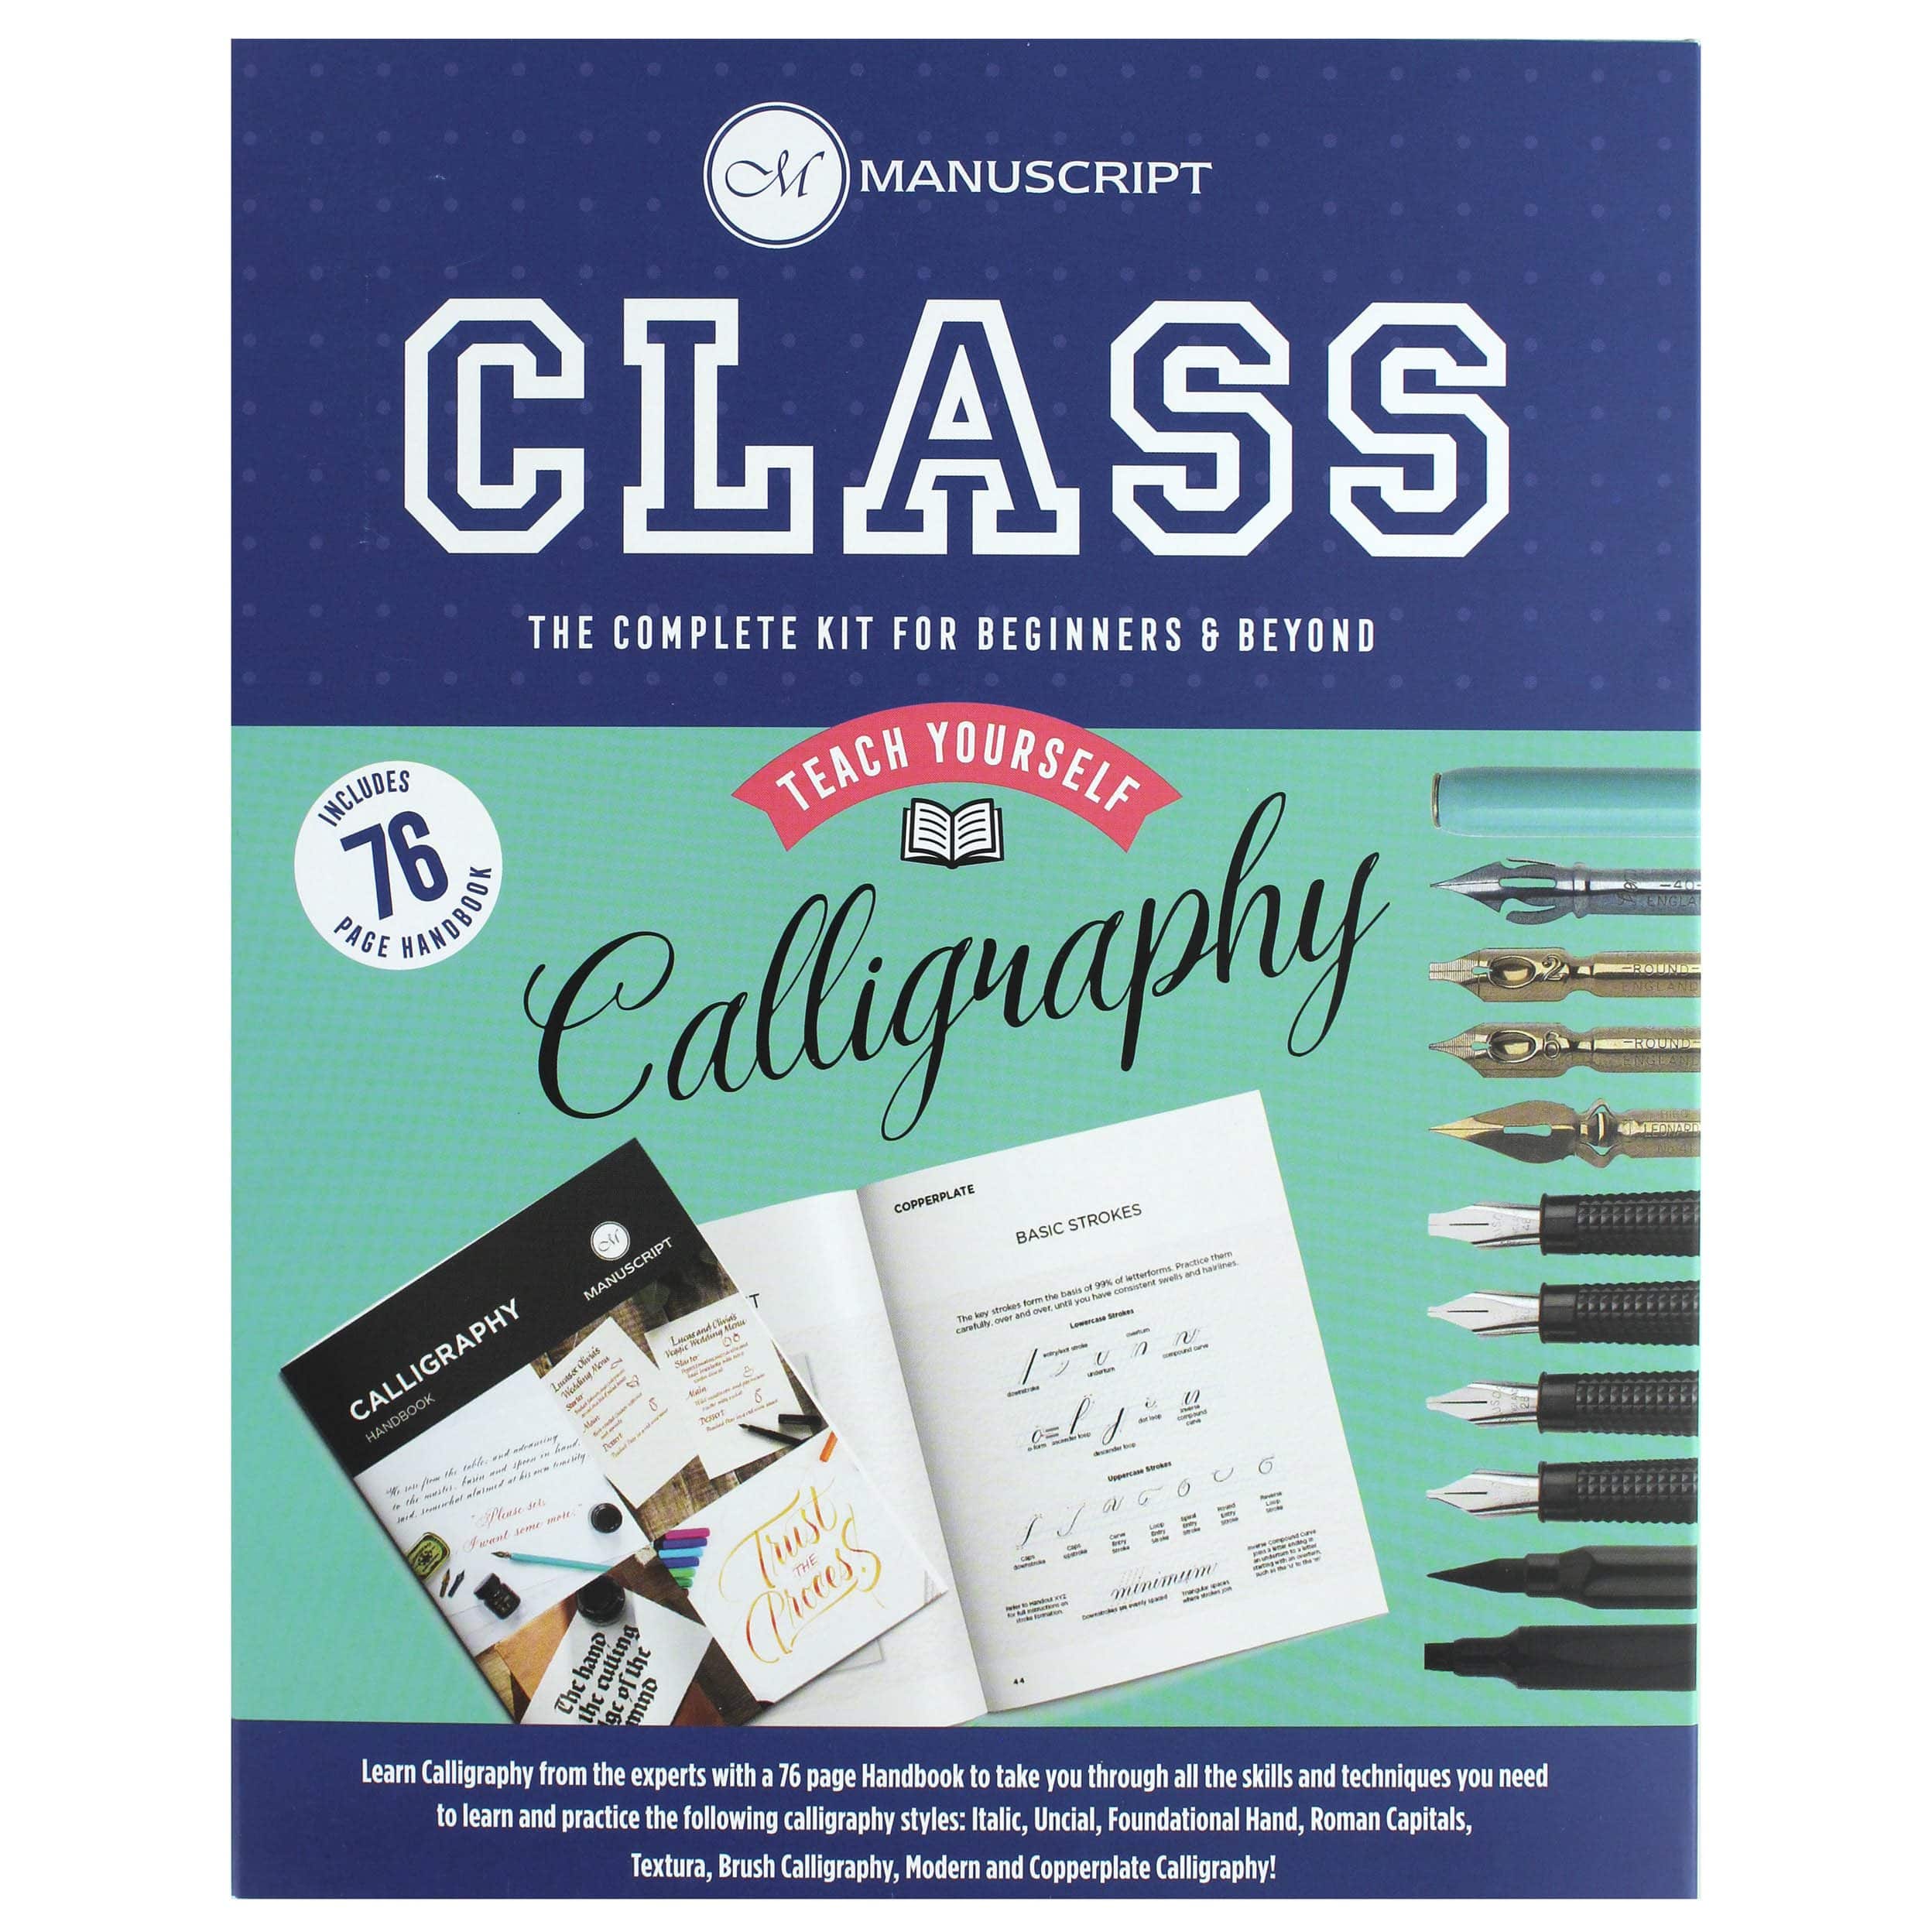 Beginners Modern Calligraphy Kit, Learn Calligraphy